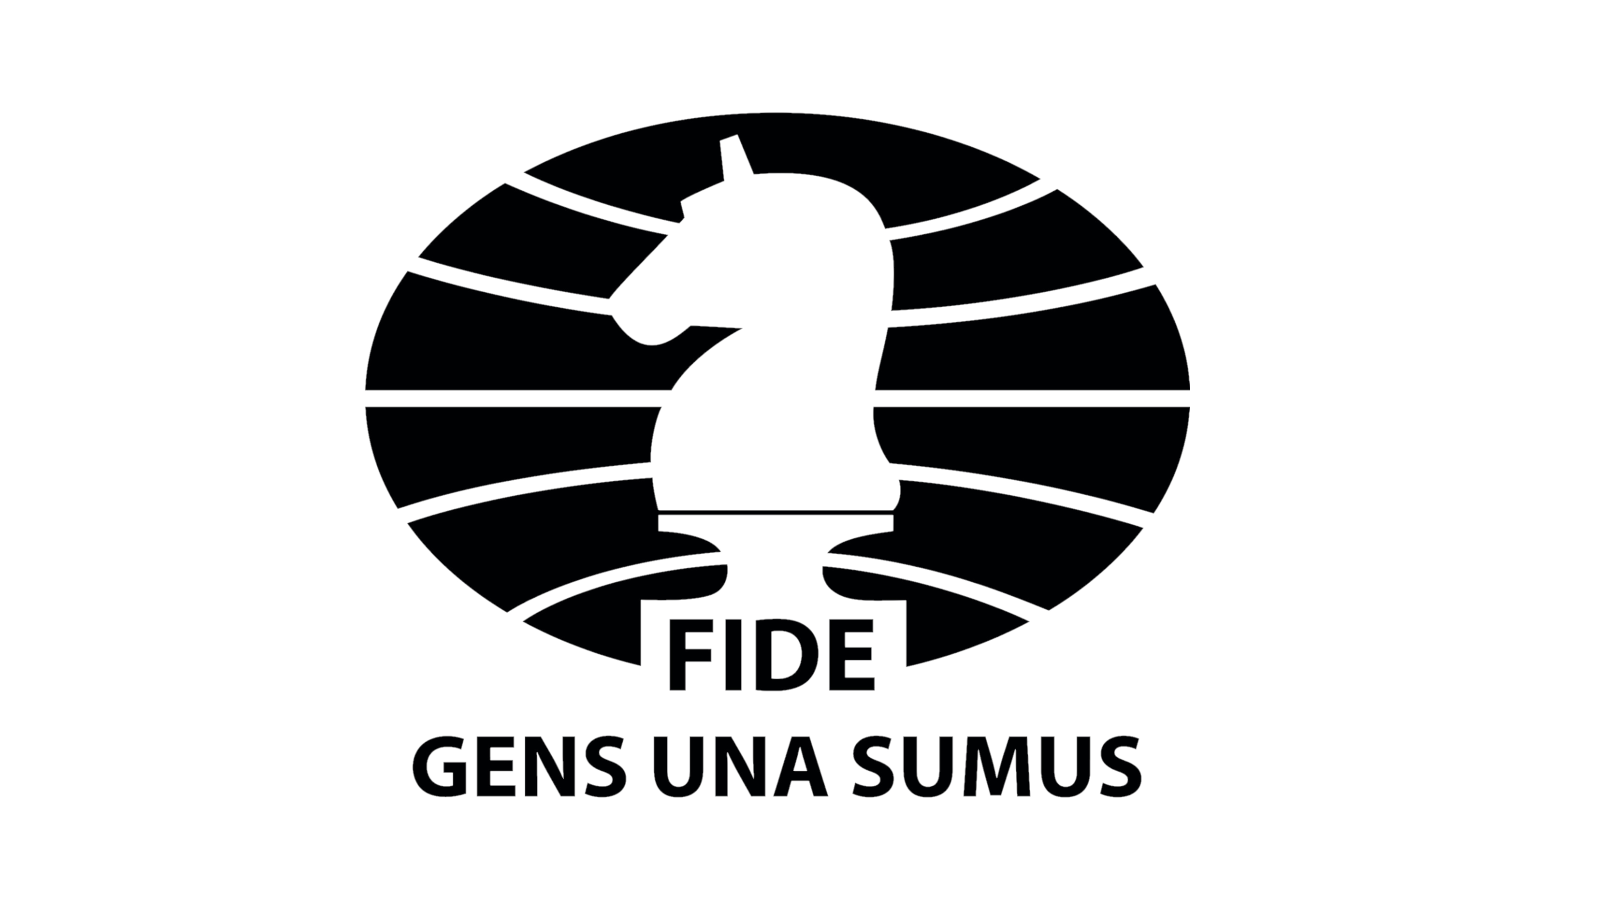 Fide chess. Международная шахматная Федерация Fide. Эмблема ФИДЕ. Логотип Fide. Всемирная шахматная Федерация.